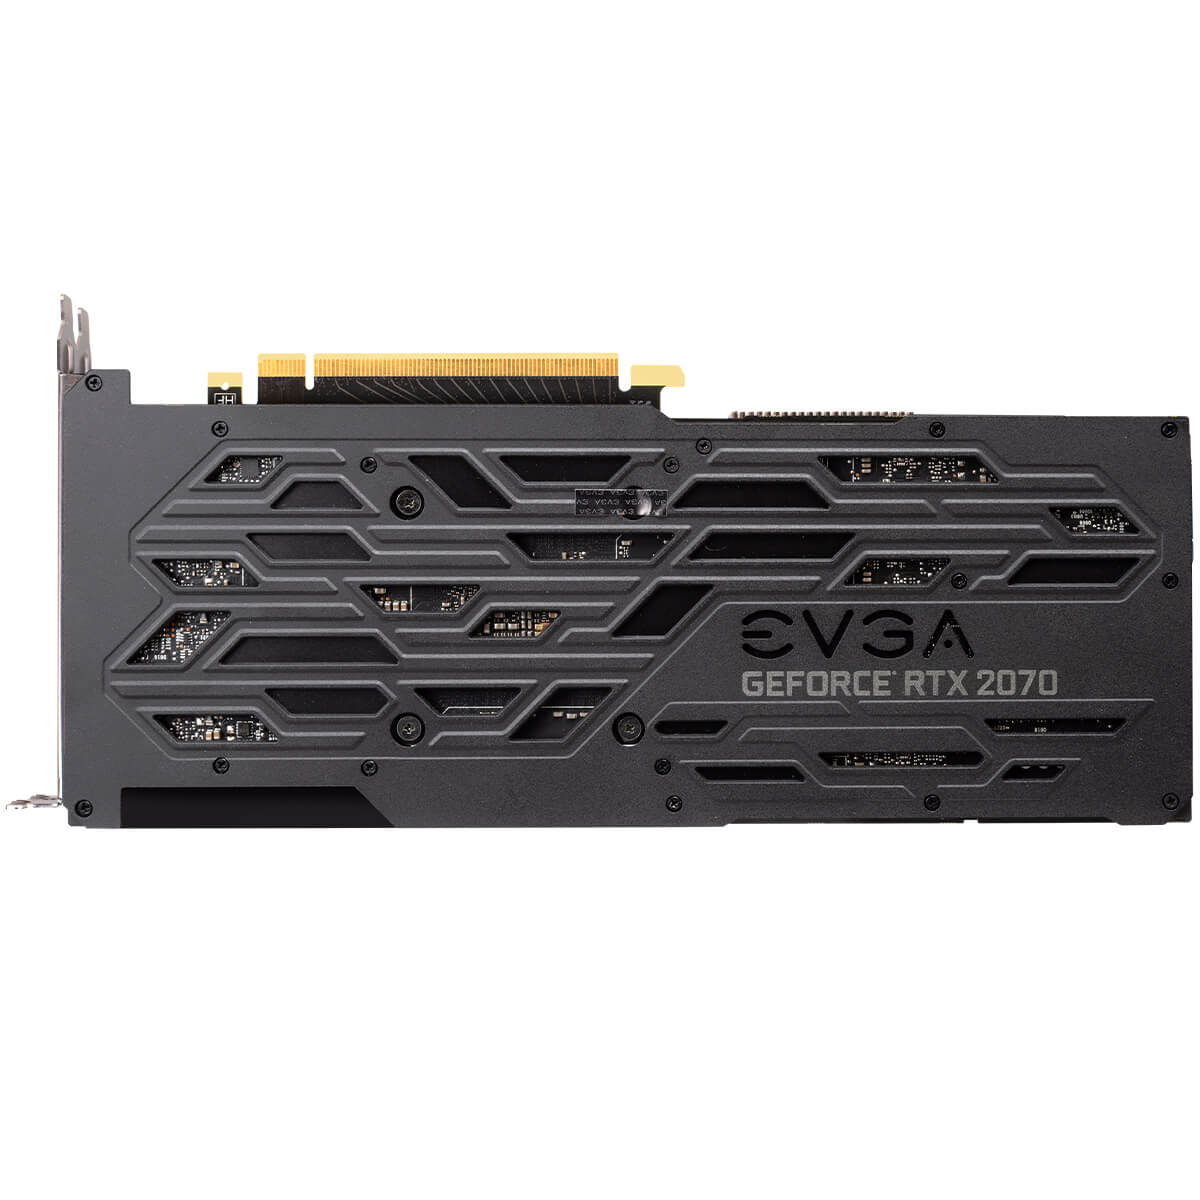 - JP - 製品 - EVGA GeForce RTX 2070 GAMING, 08G-P4-2172-KR, 8GB GDDR6, Dual HDB Fans, RGB Metal Backplate - 08G-P4-2172-KR